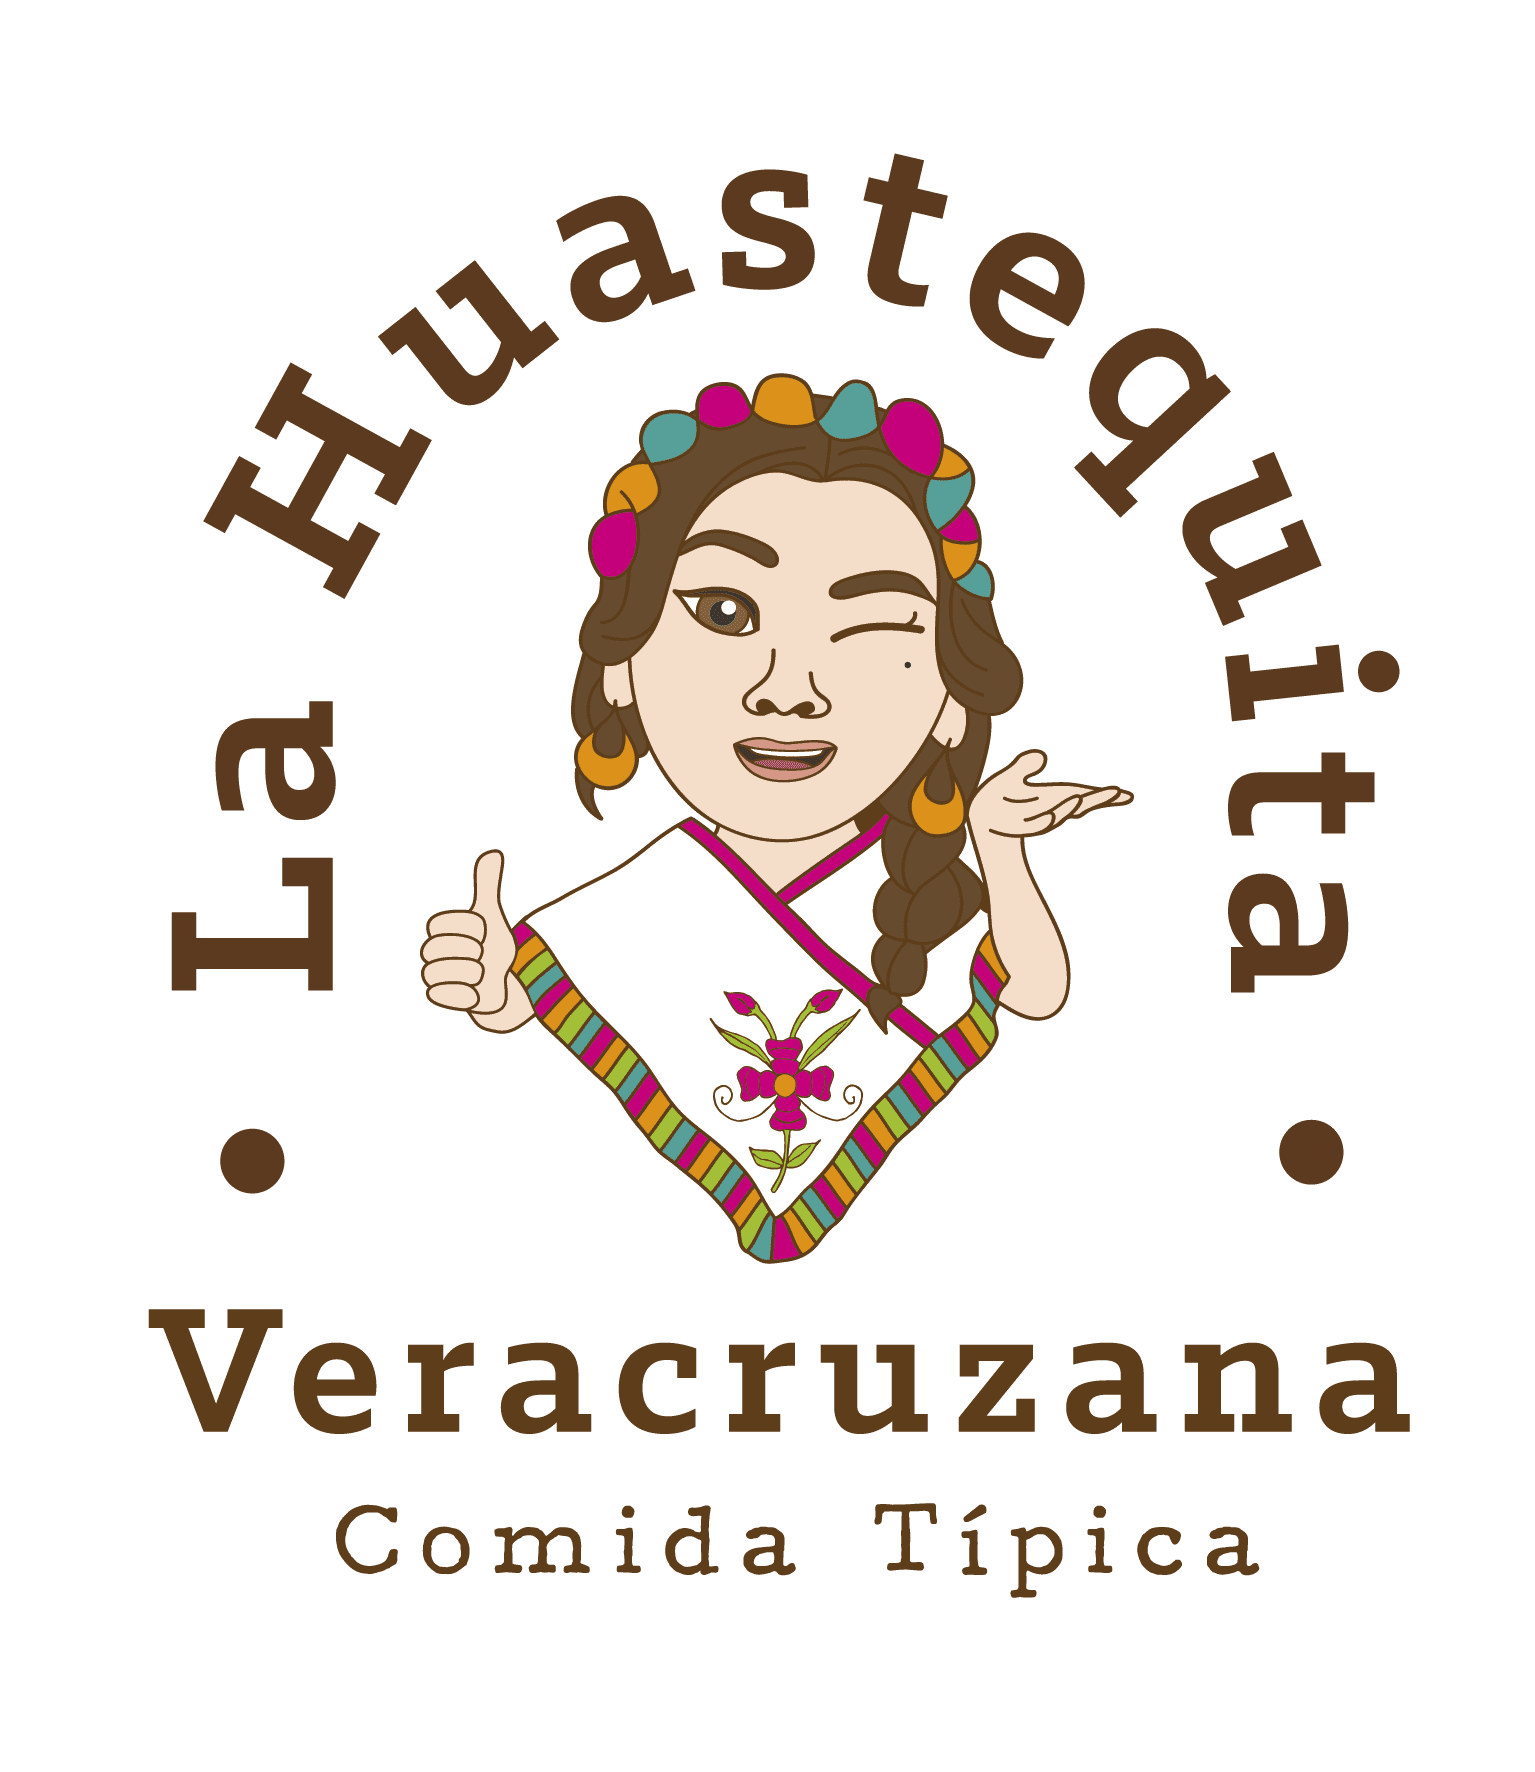 La Huastequita Veracruzana